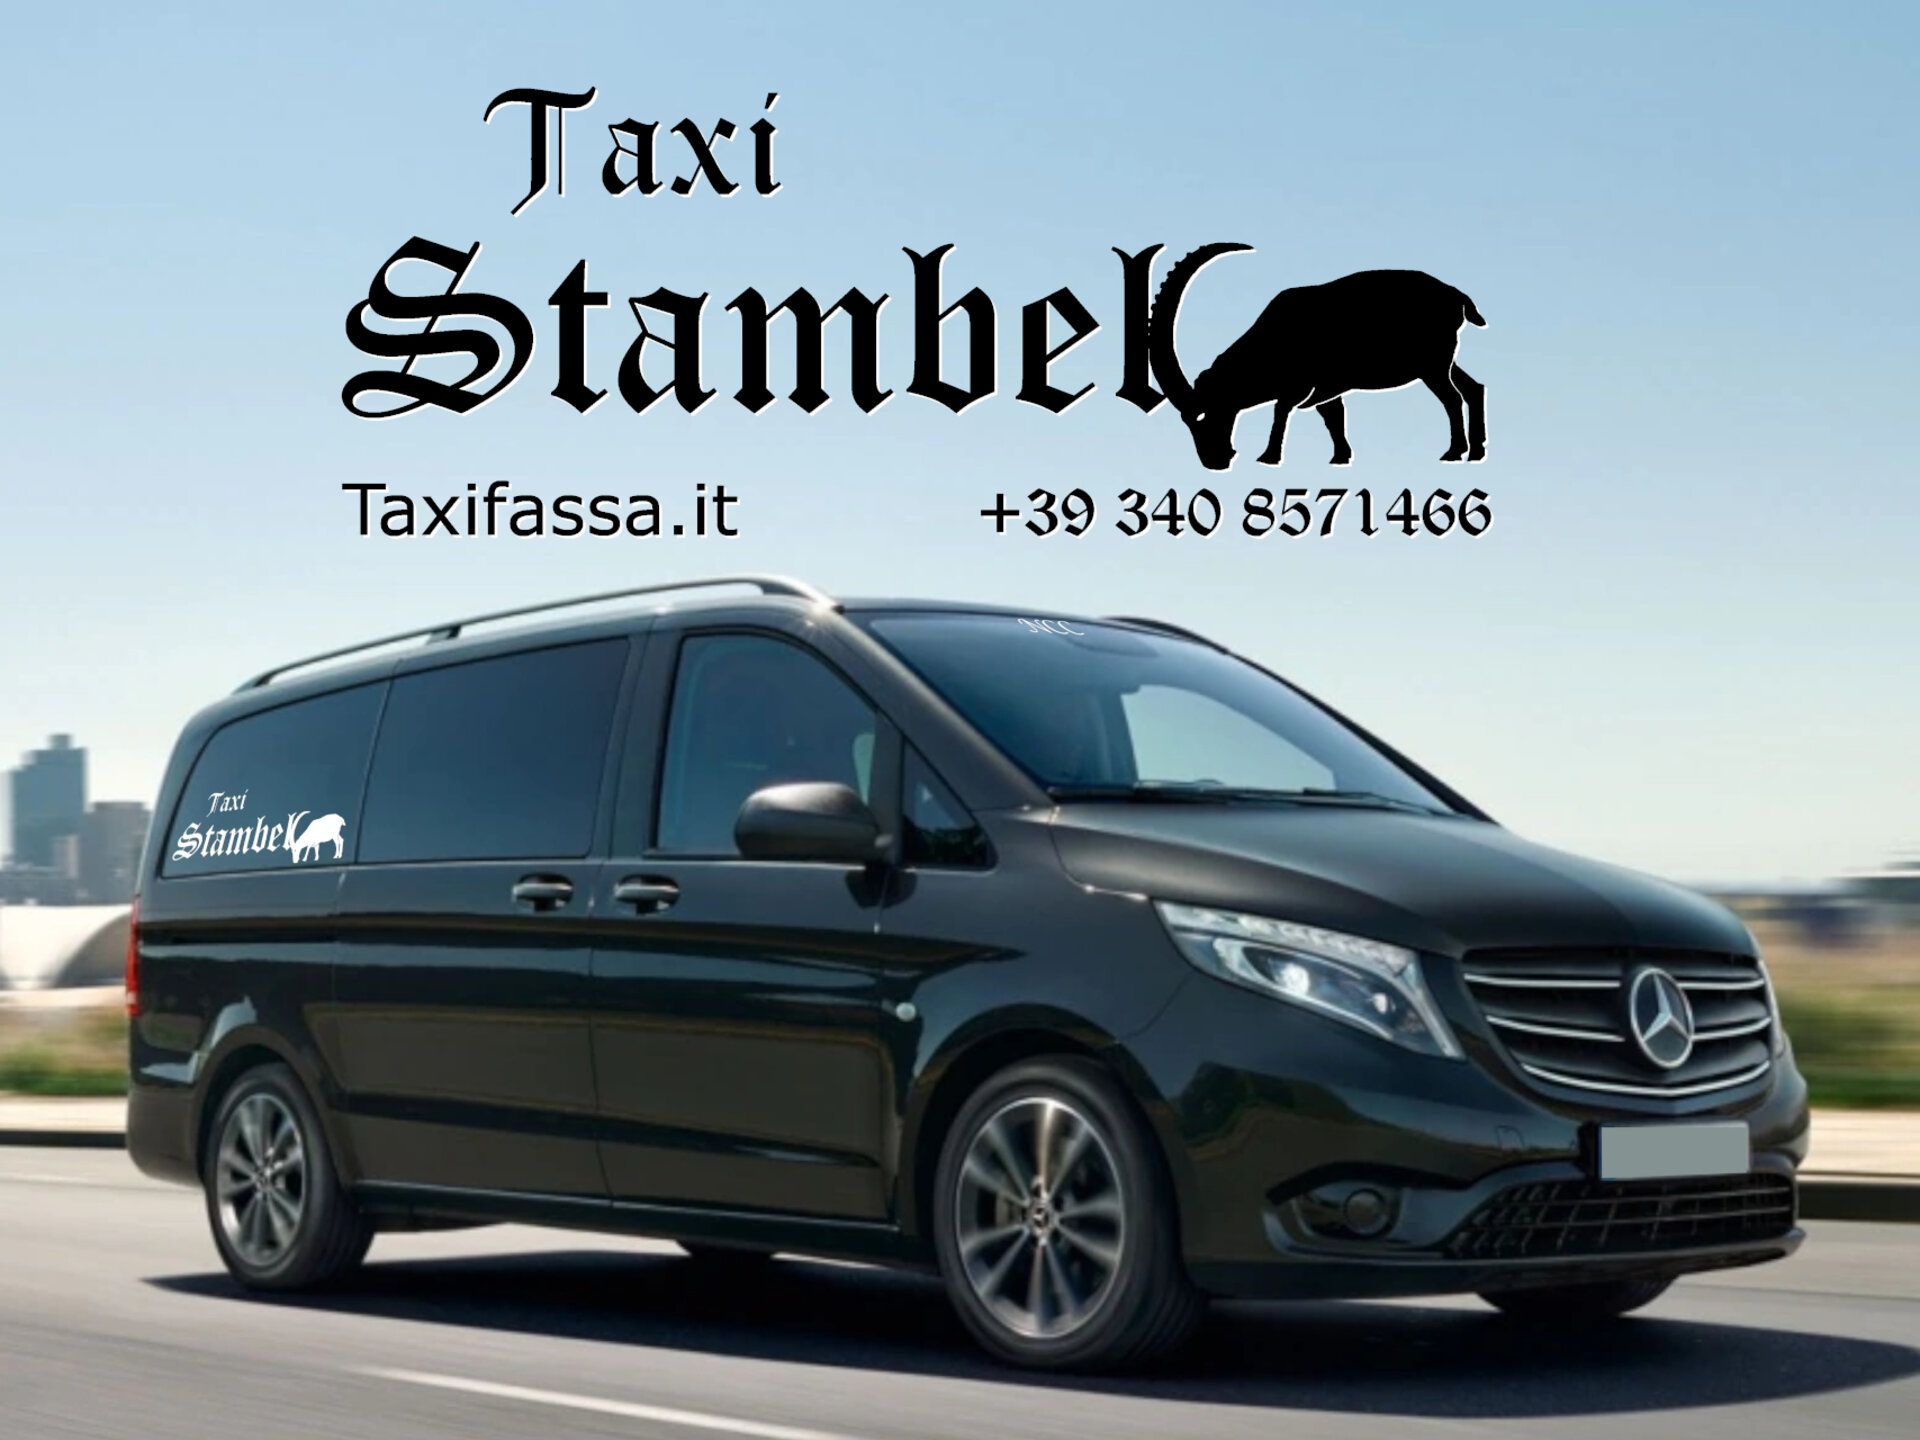 Taxi Stambek